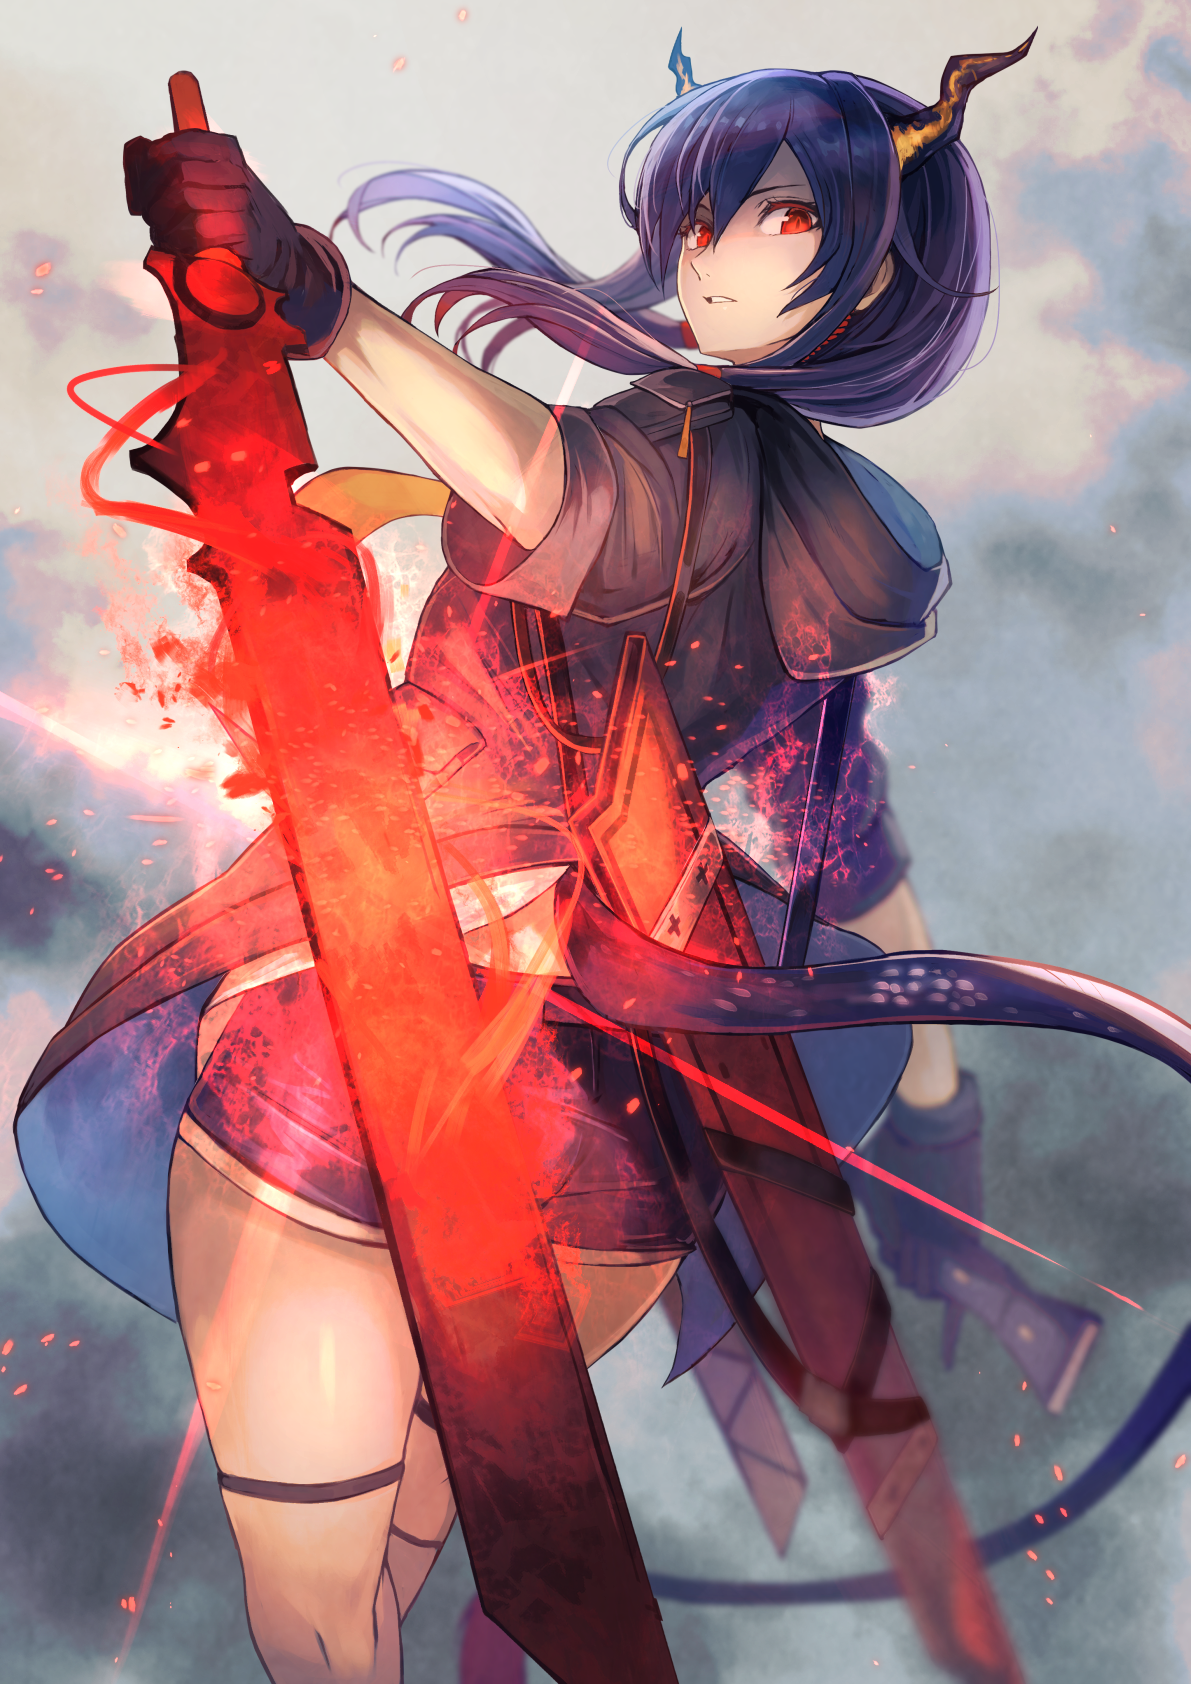 Anime 1191x1684 anime anime girls digital art artwork 2D portrait display Arknights Ohako sword dragon girl horns tail purple hair red eyes Chen (Arknights)